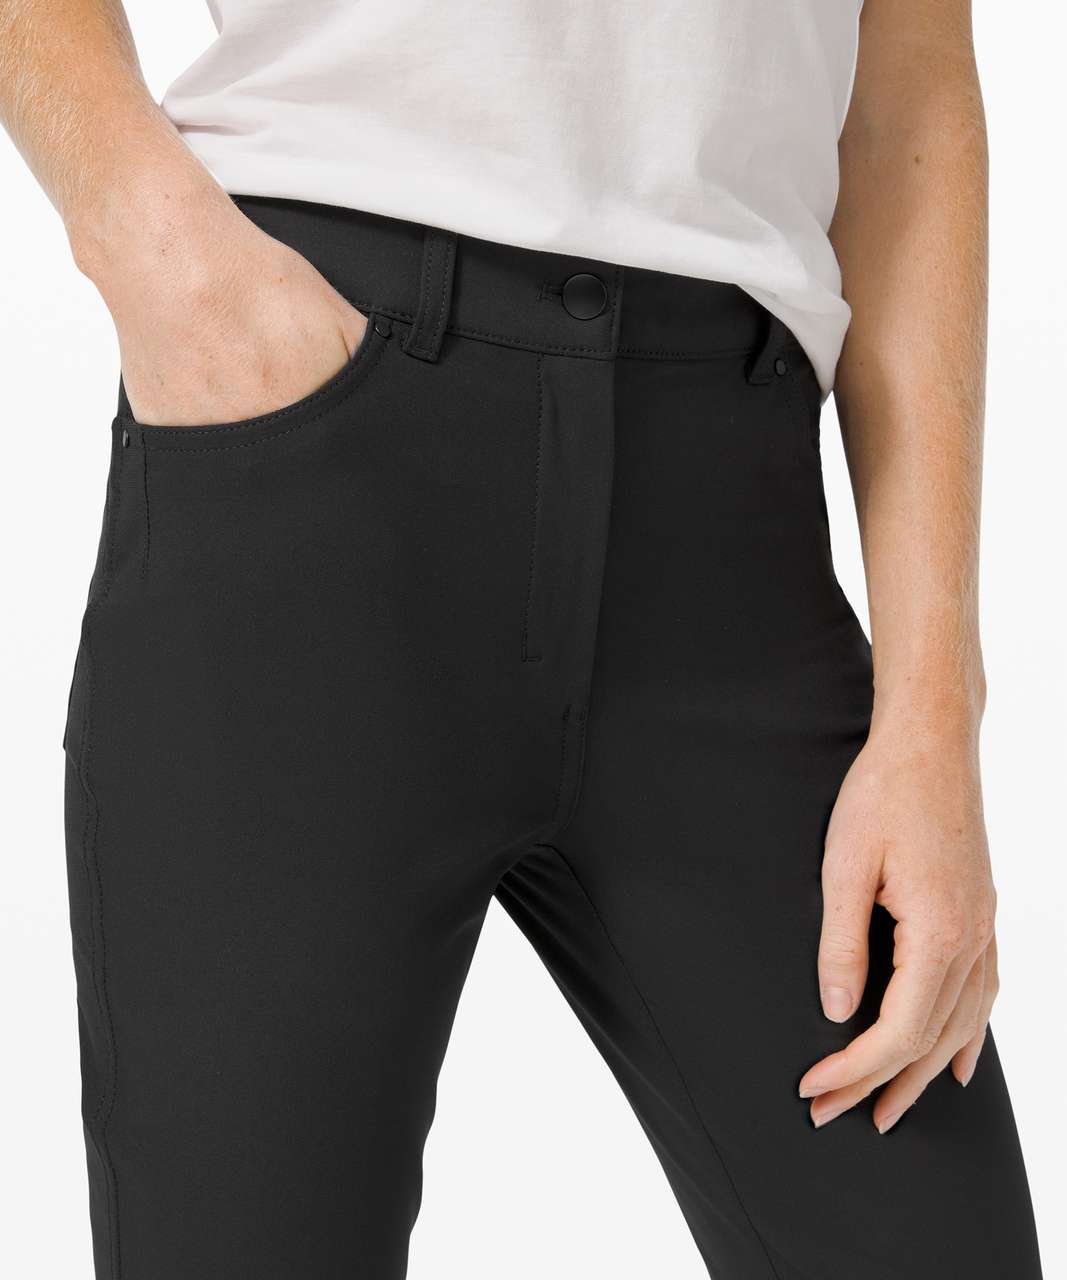 Lululemon City Sleek 5 Pocket Wide-Leg High Rise 7/8 Length Pant Trench  size 29